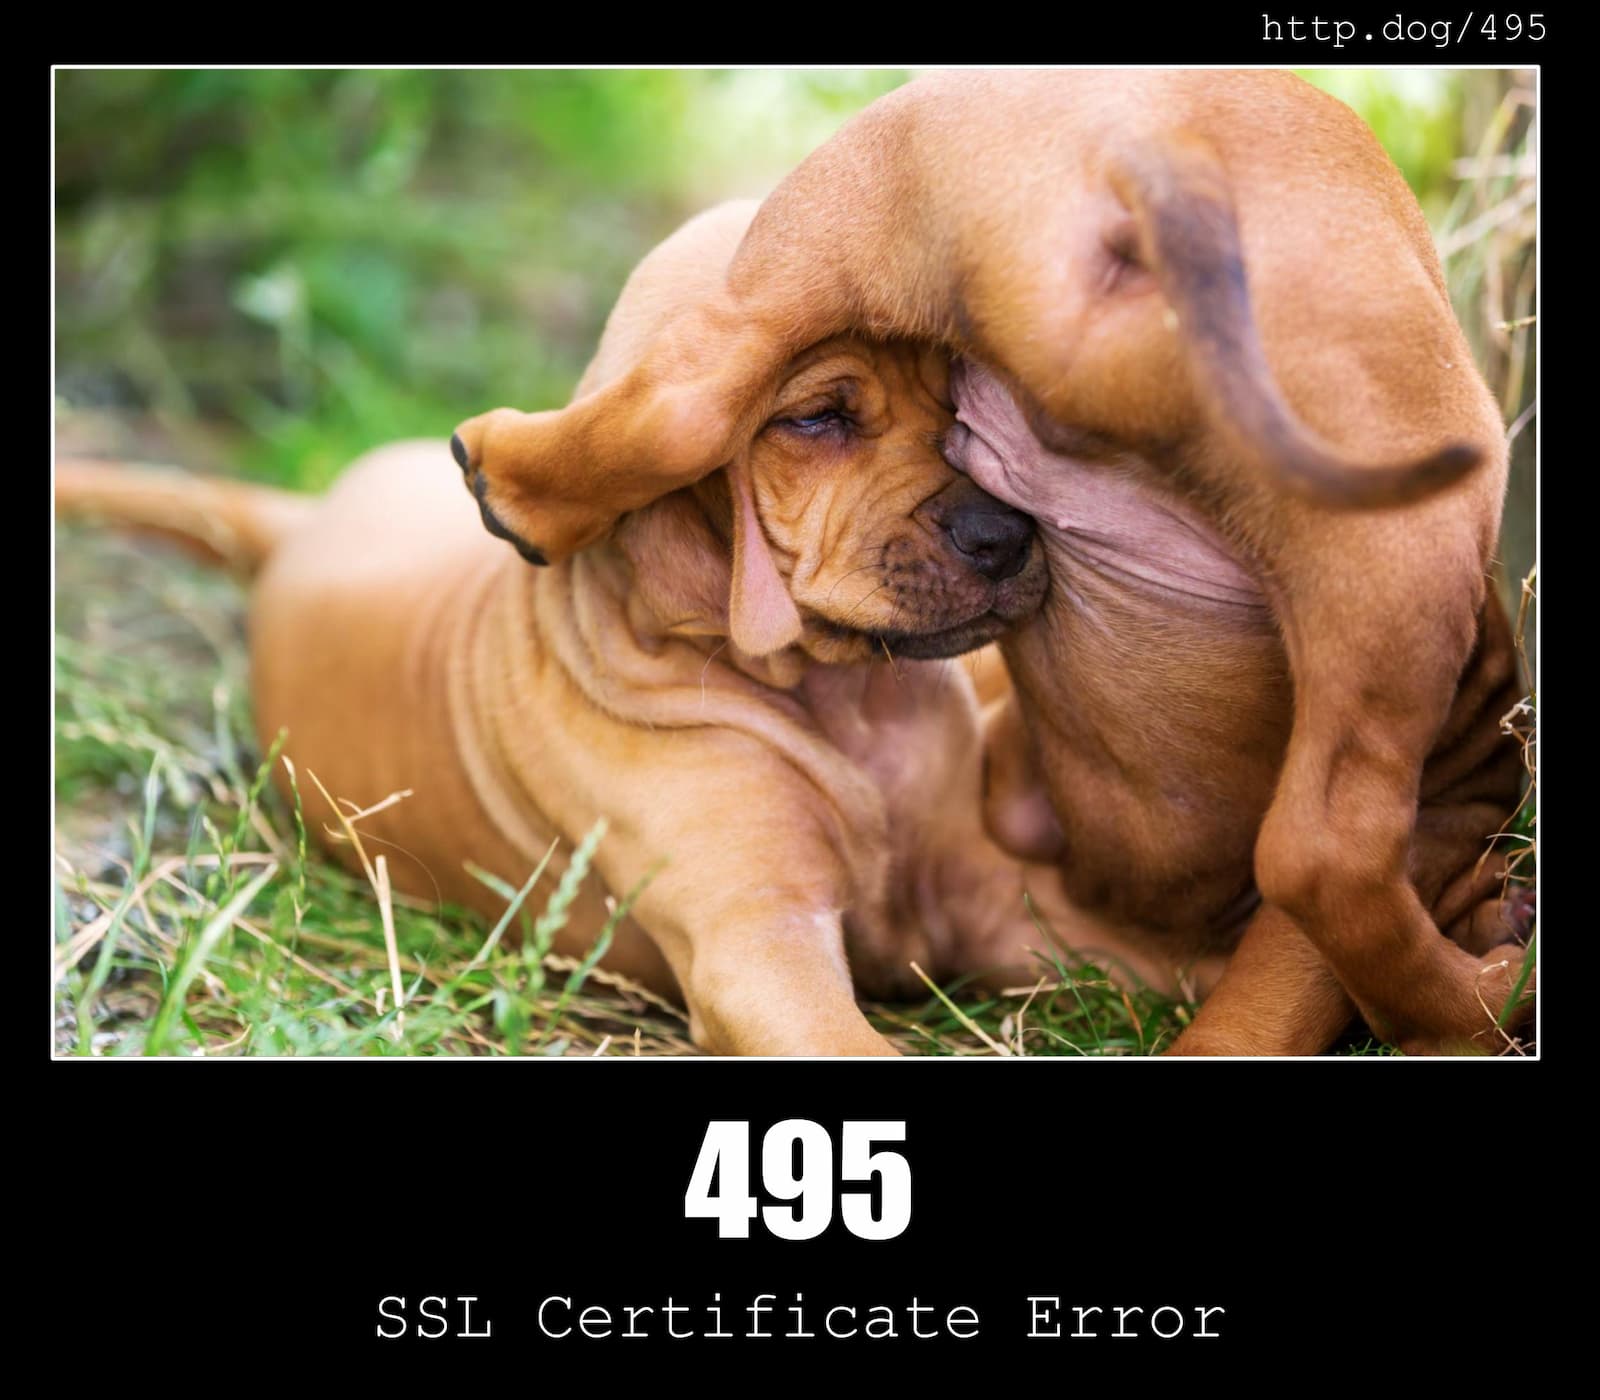 HTTP Status Code 495 SSL Certificate Error & Dogs